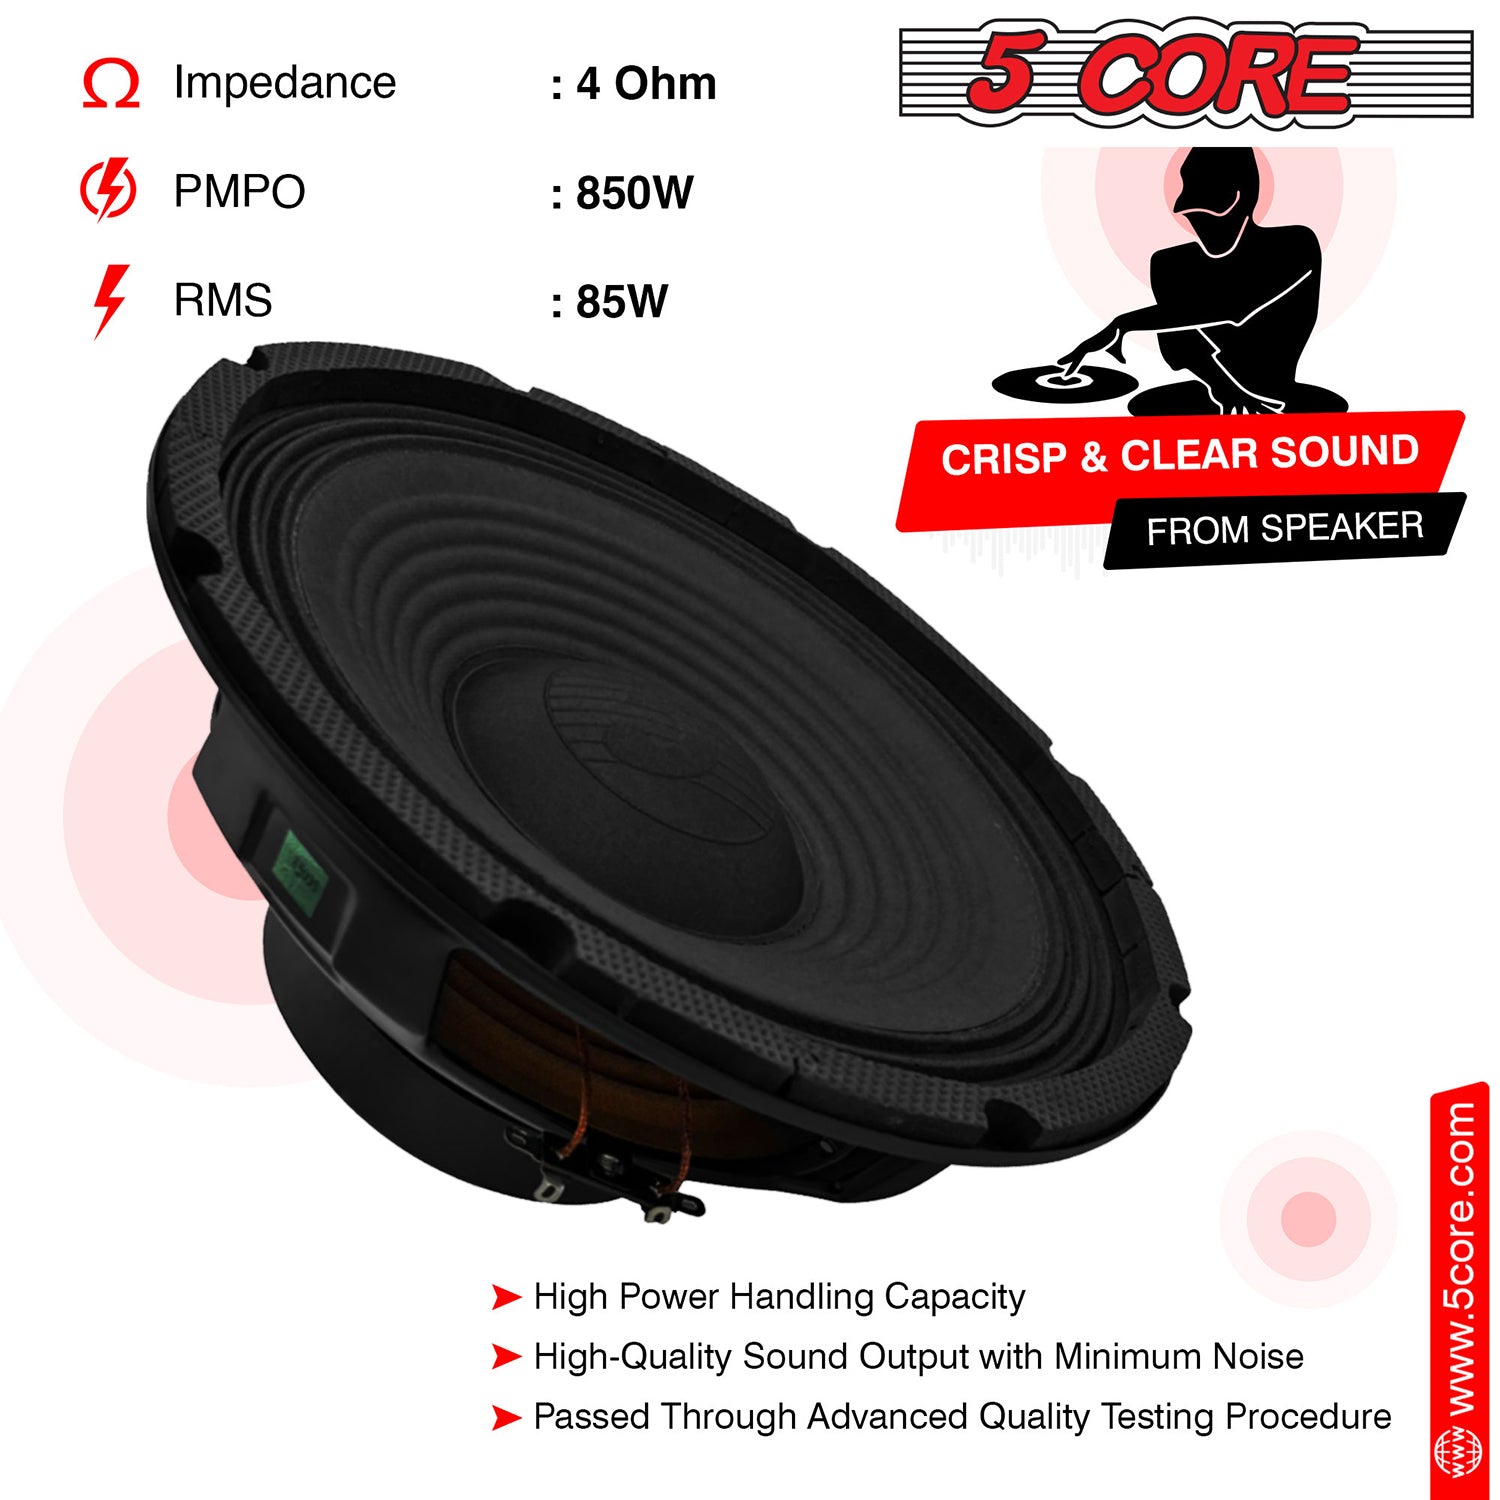 5Core 10 Inch Subwoofer Car Audio Subwoofers 850W Peak 4 Ohm Replacement Full Range Car Bass Sub Woofer Speaker